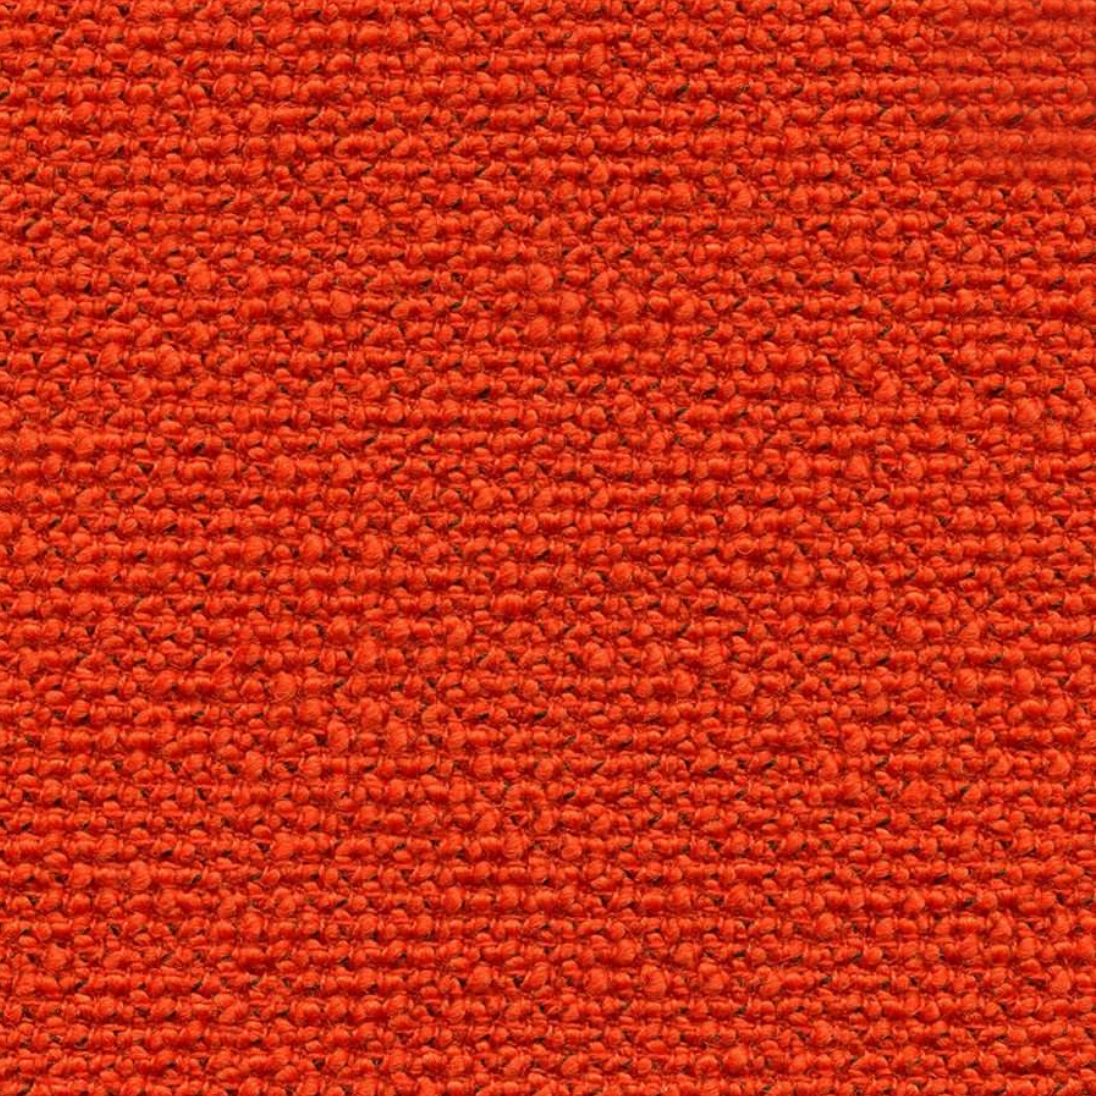 Orange Yoredale Boucle Fabric [+$270.00]